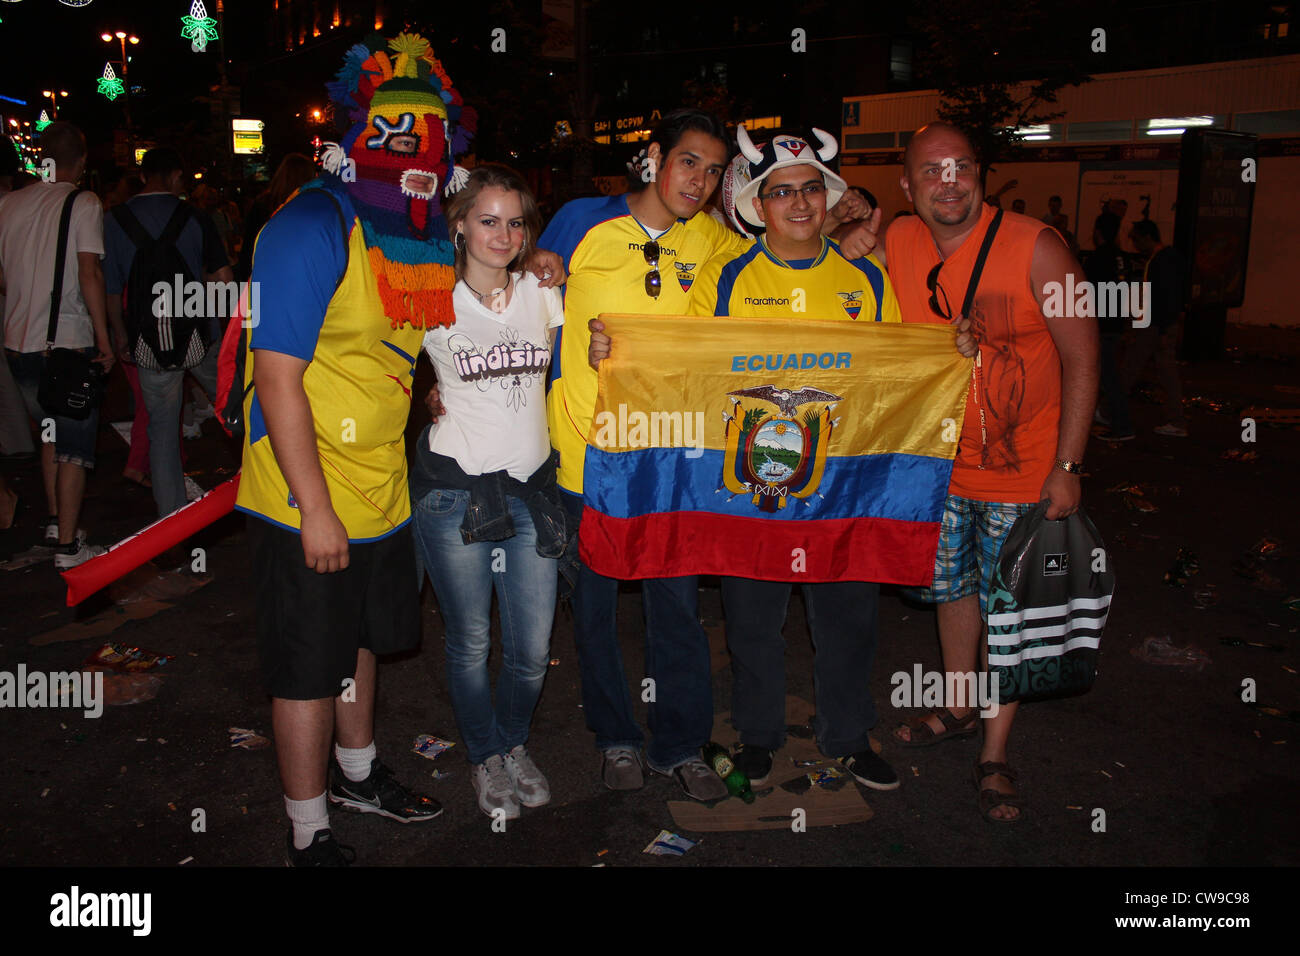 Equador fans. Final. Kiev, Ukraine, European Football Championship 2012 Stock Photo